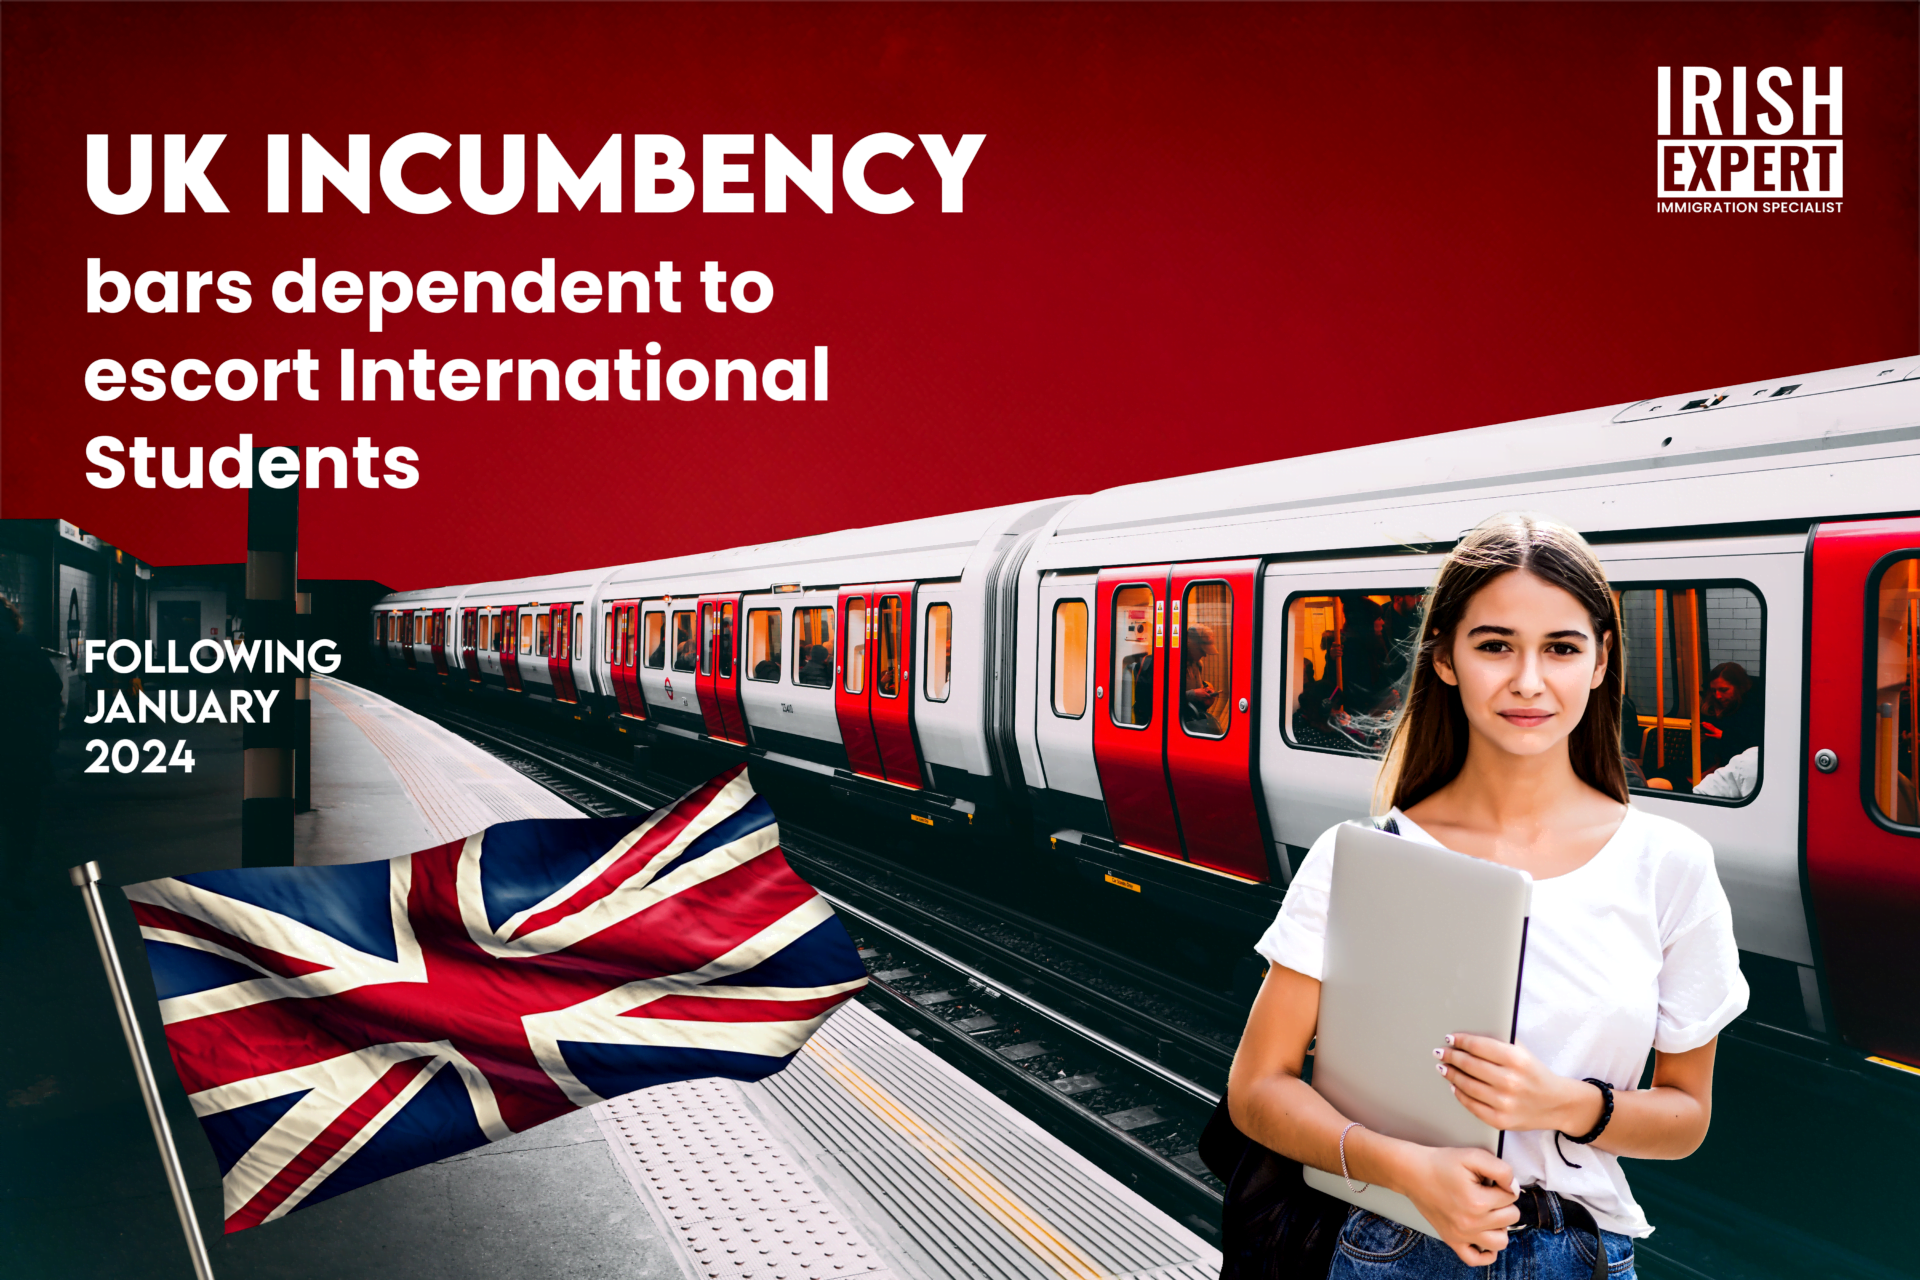 UK Incumbency bars dependent to escort International Students following January 2024